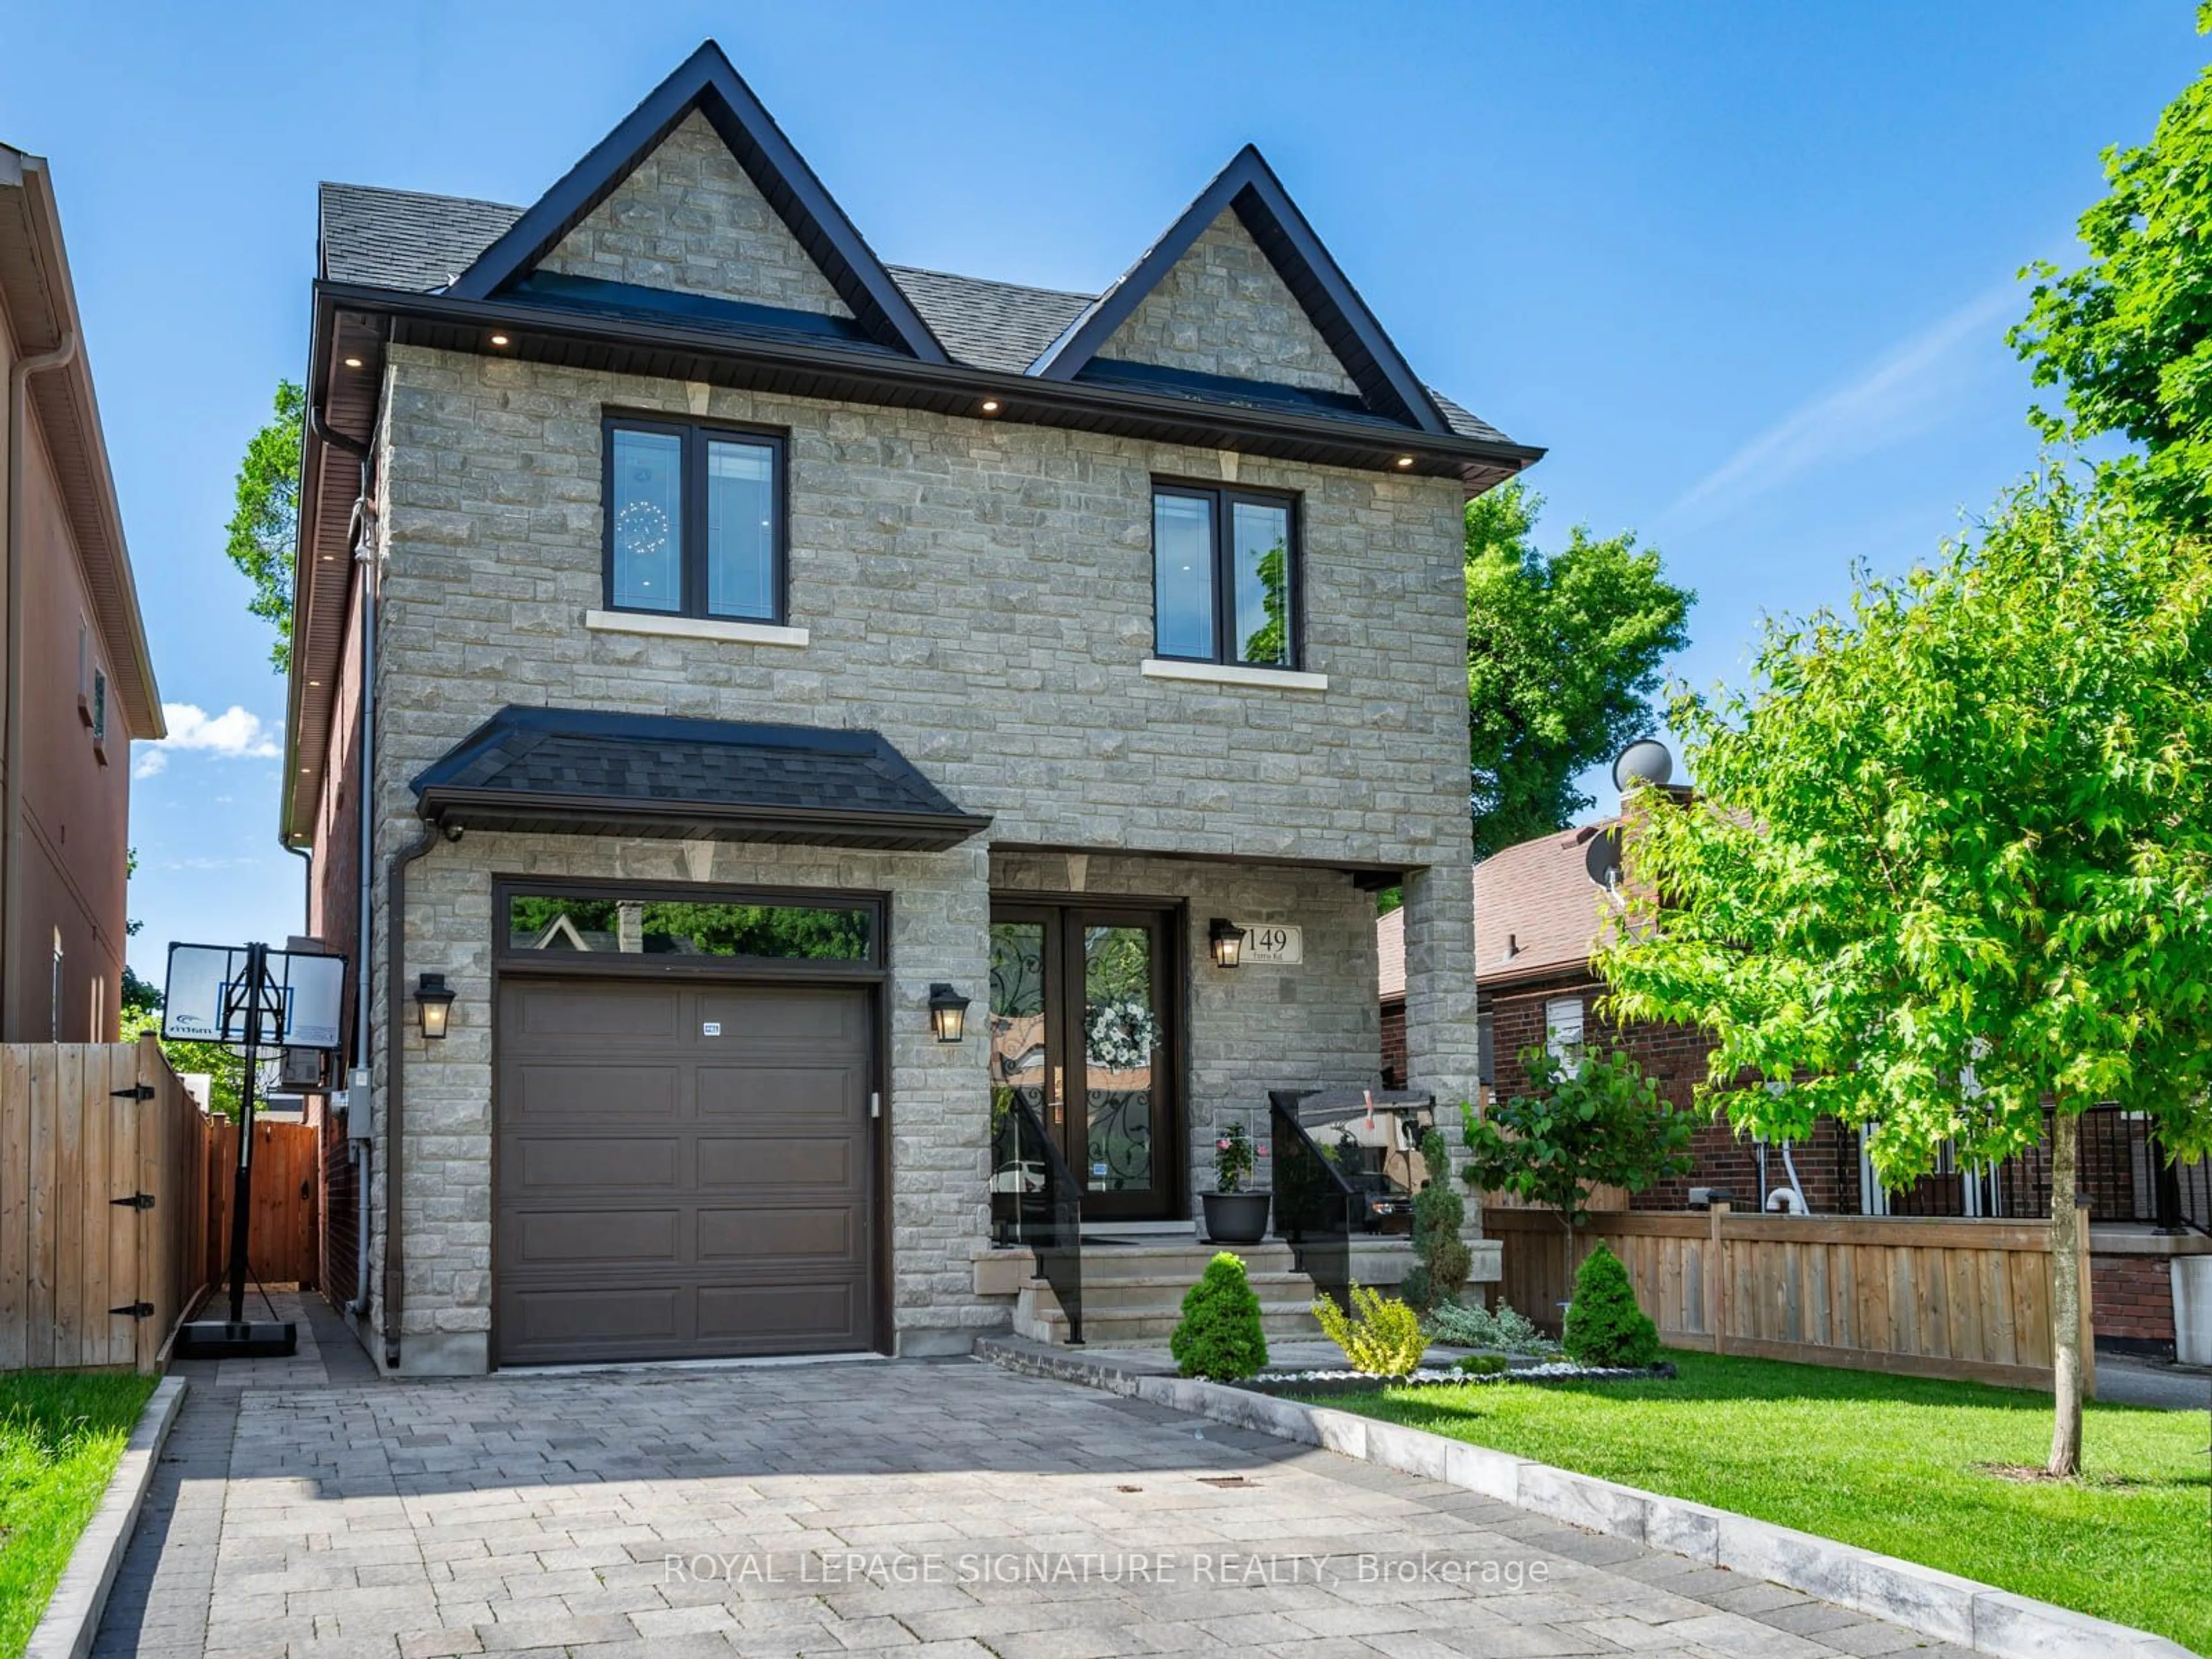 Home with brick exterior material for 149 Ferris Rd, Toronto Ontario M4B 1G7